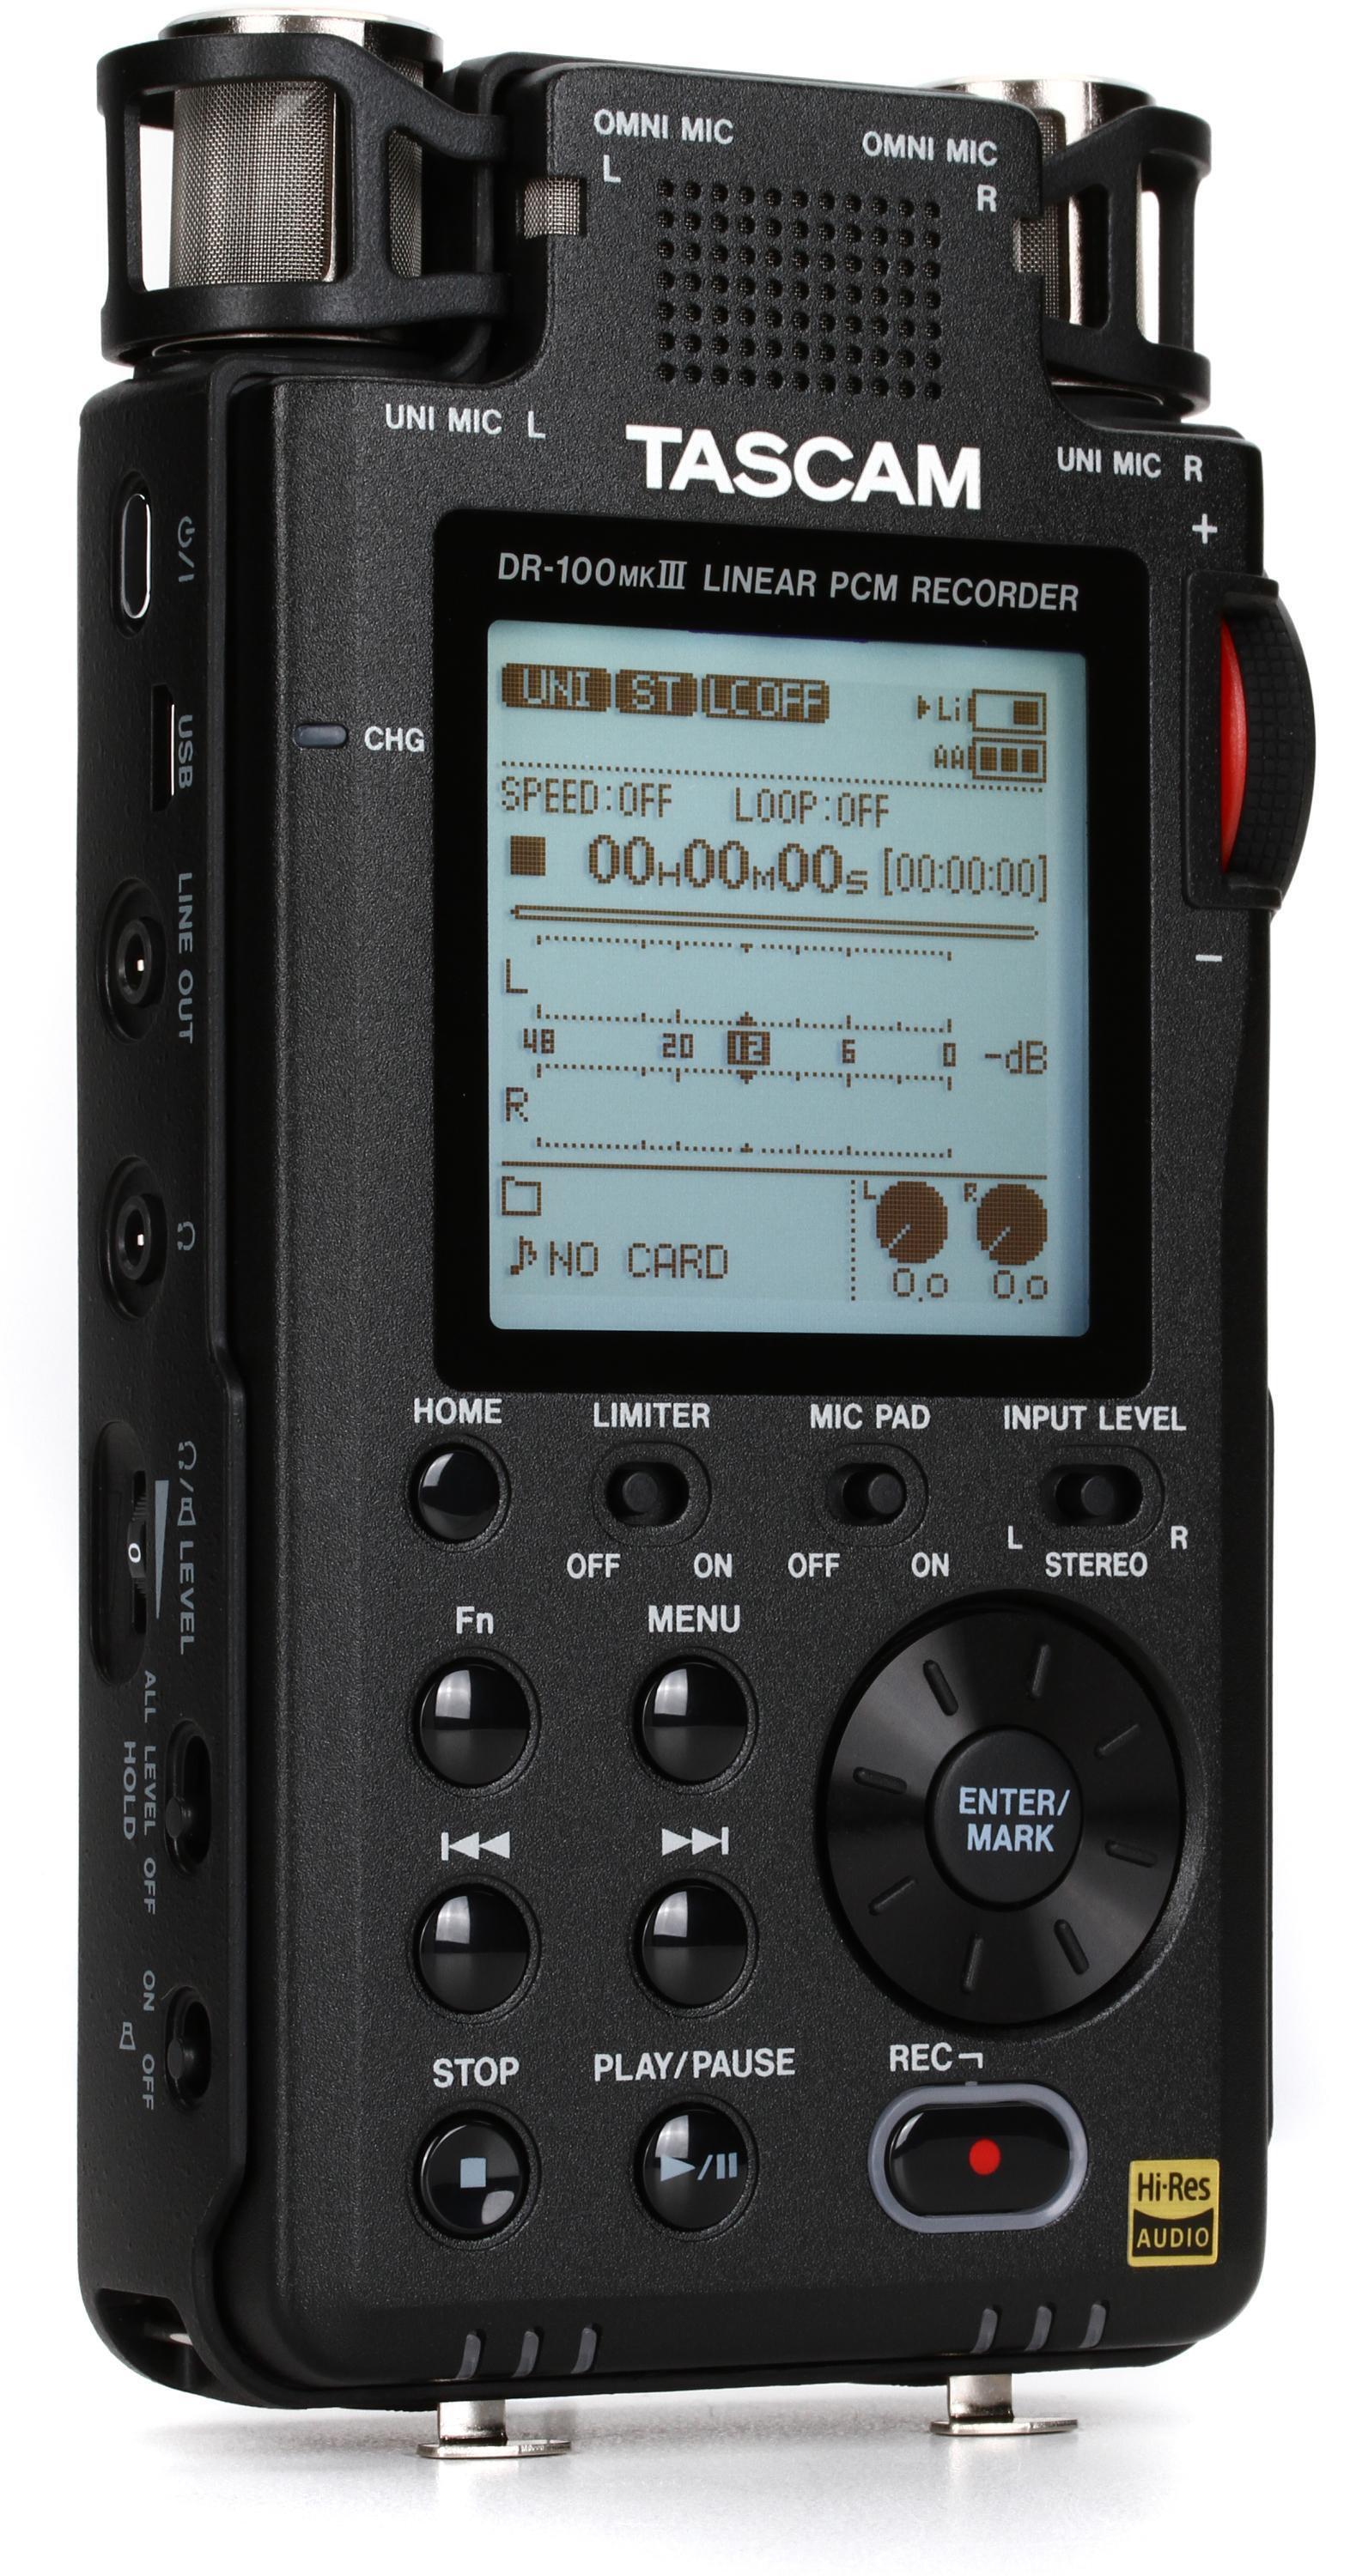 TASCAM DR-100mkIII Handheld Digital Stereo Recorder Reviews